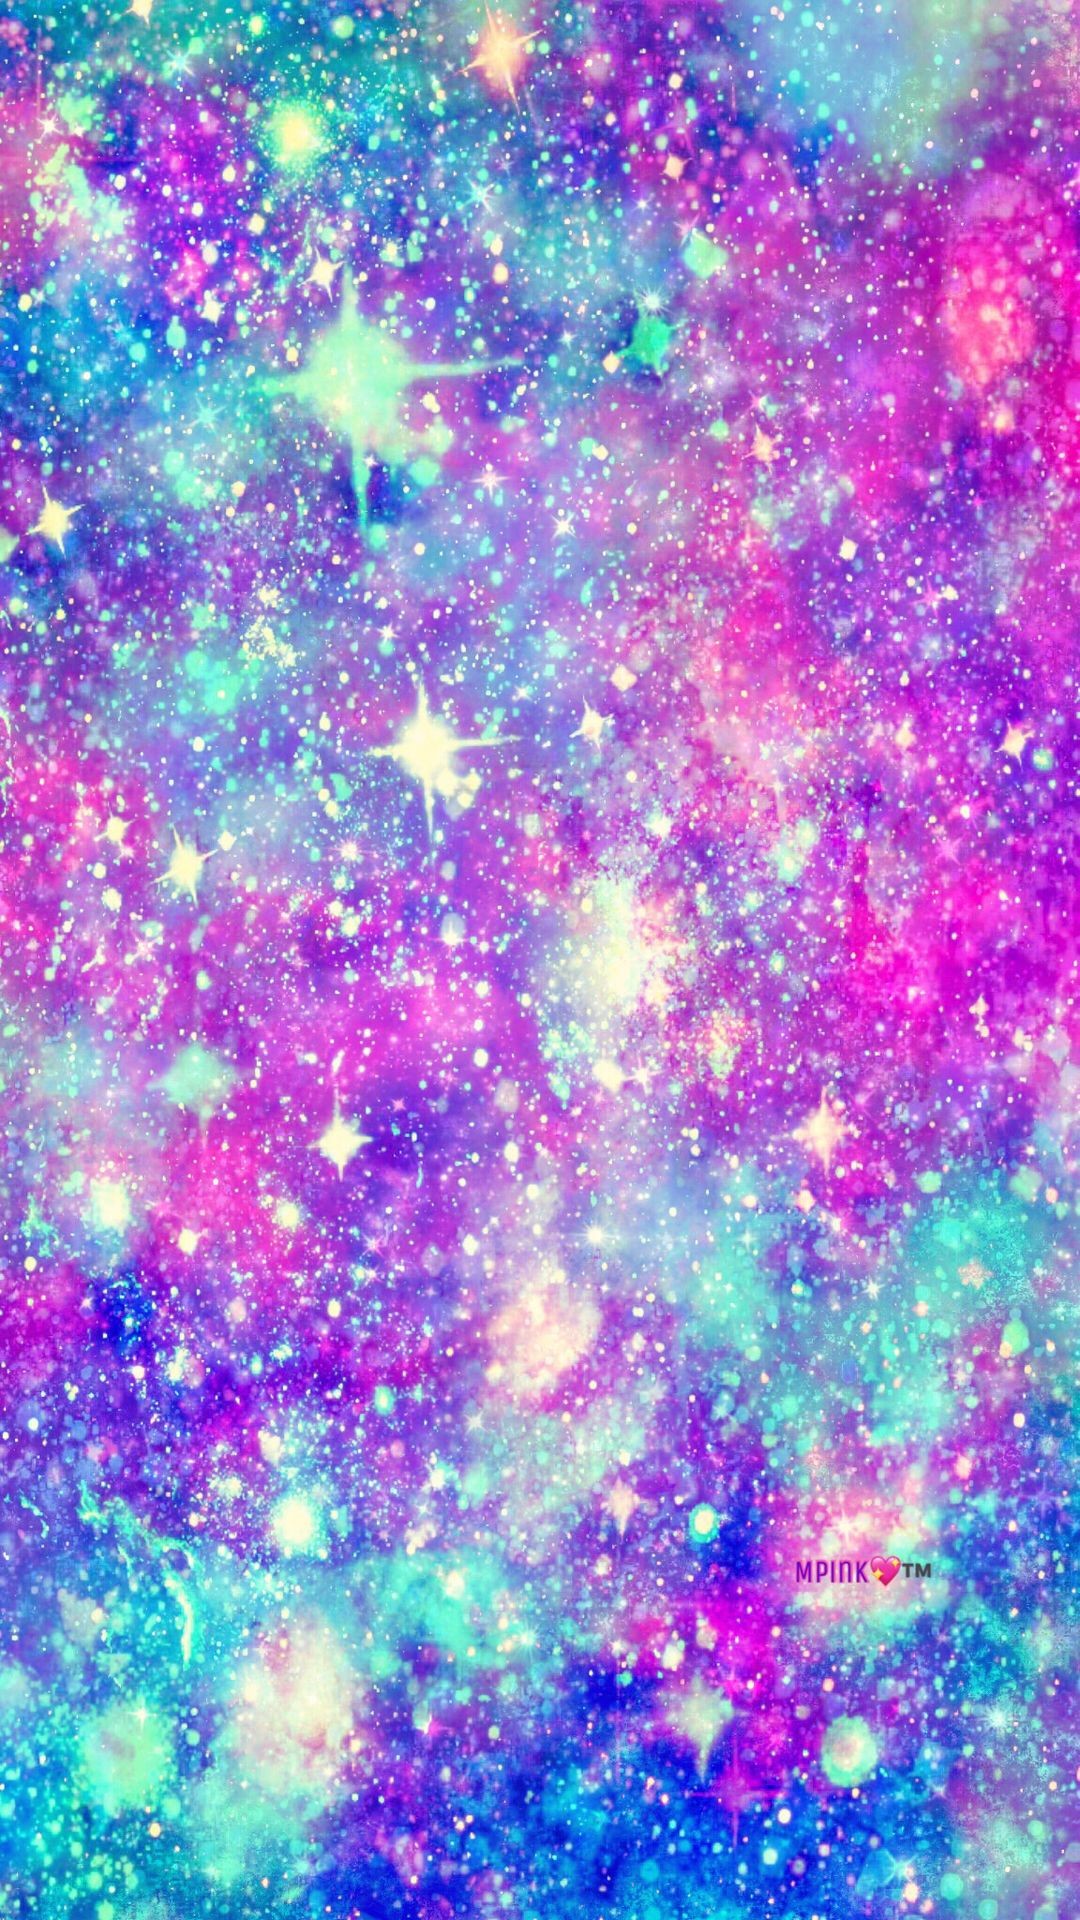 1080x1920, Glacial Galaxy Wallpaper - Glitter Pretty Backgrounds -  1080x1920 Wallpaper 